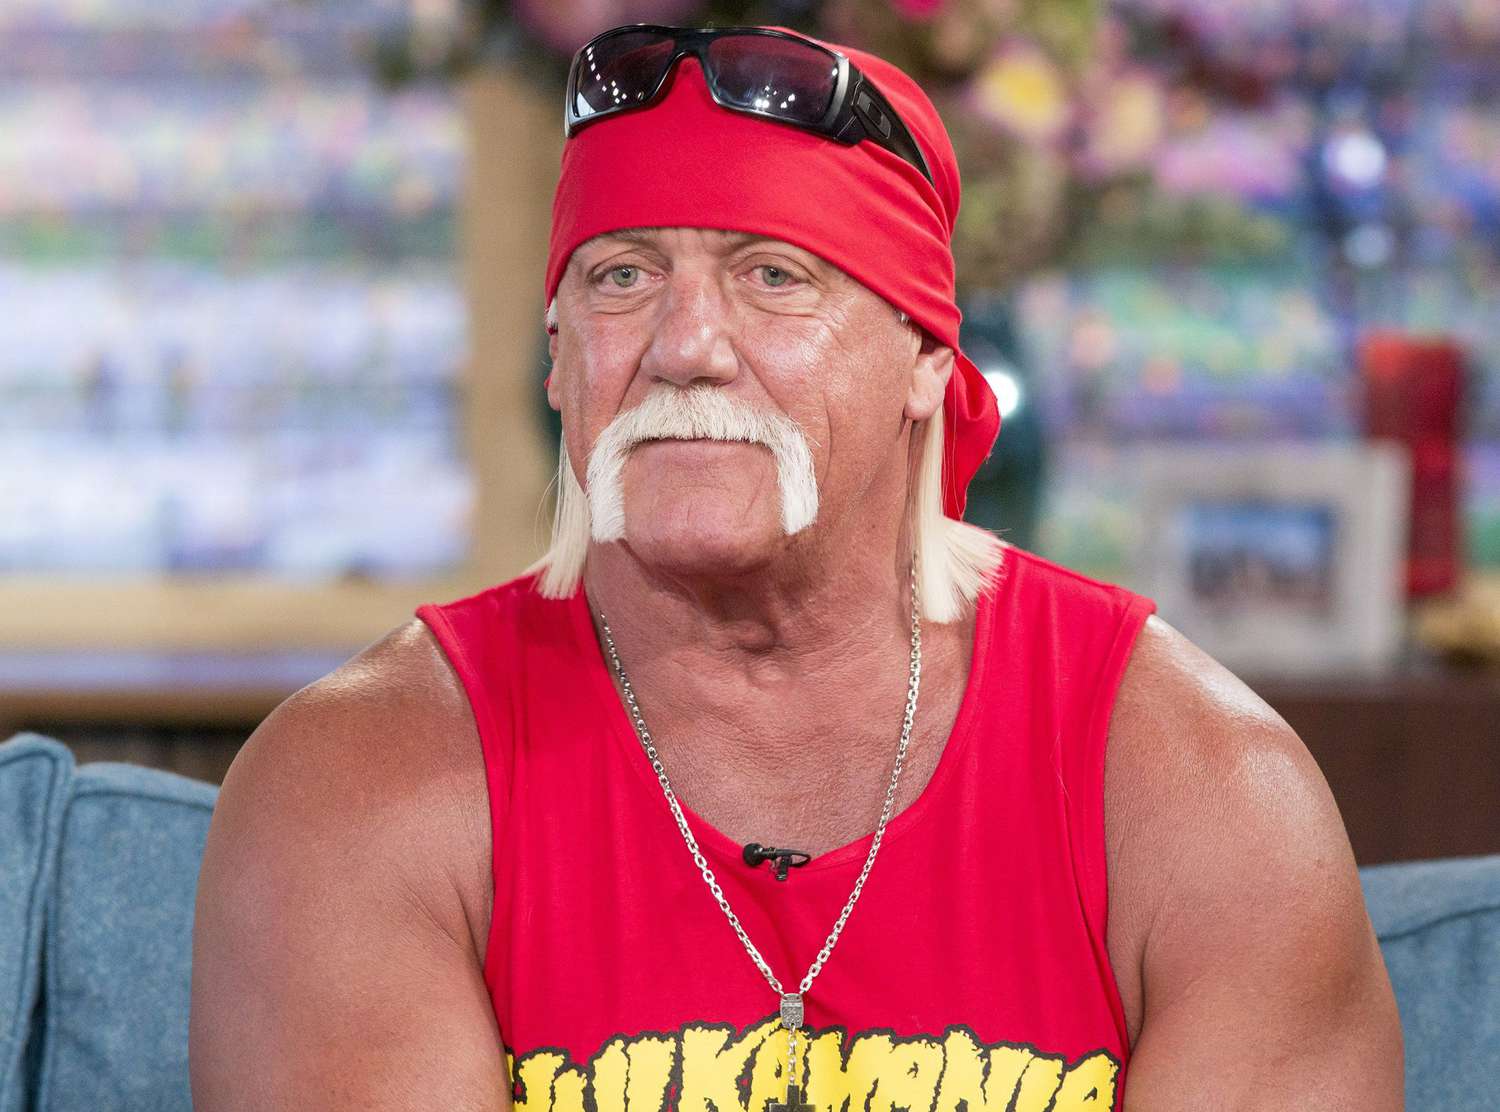 EXCLUSIVE: Inside Hulk Hogan's Life Now | PEOPLE.com